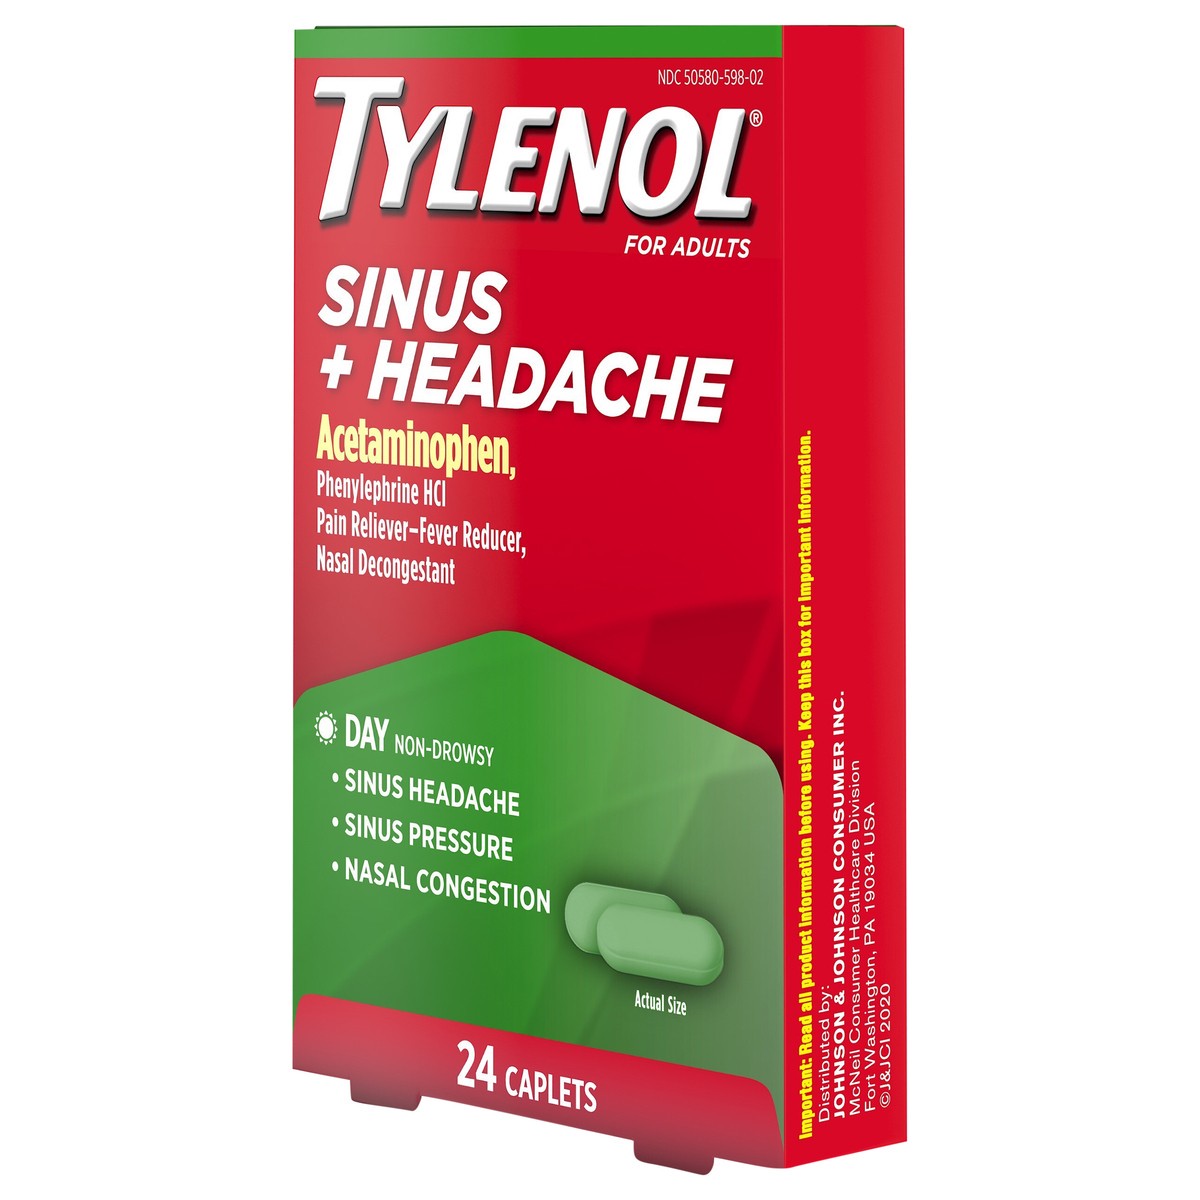 slide 8 of 8, Tylenol Sinus + Headache Daytime Non-Drowsy Relief Caplets, Acetaminophen 325mg, Nasal Decongestant for Sinus Pressure, Headache & Nasal Congestion Relief, 24 ct, 24 ct